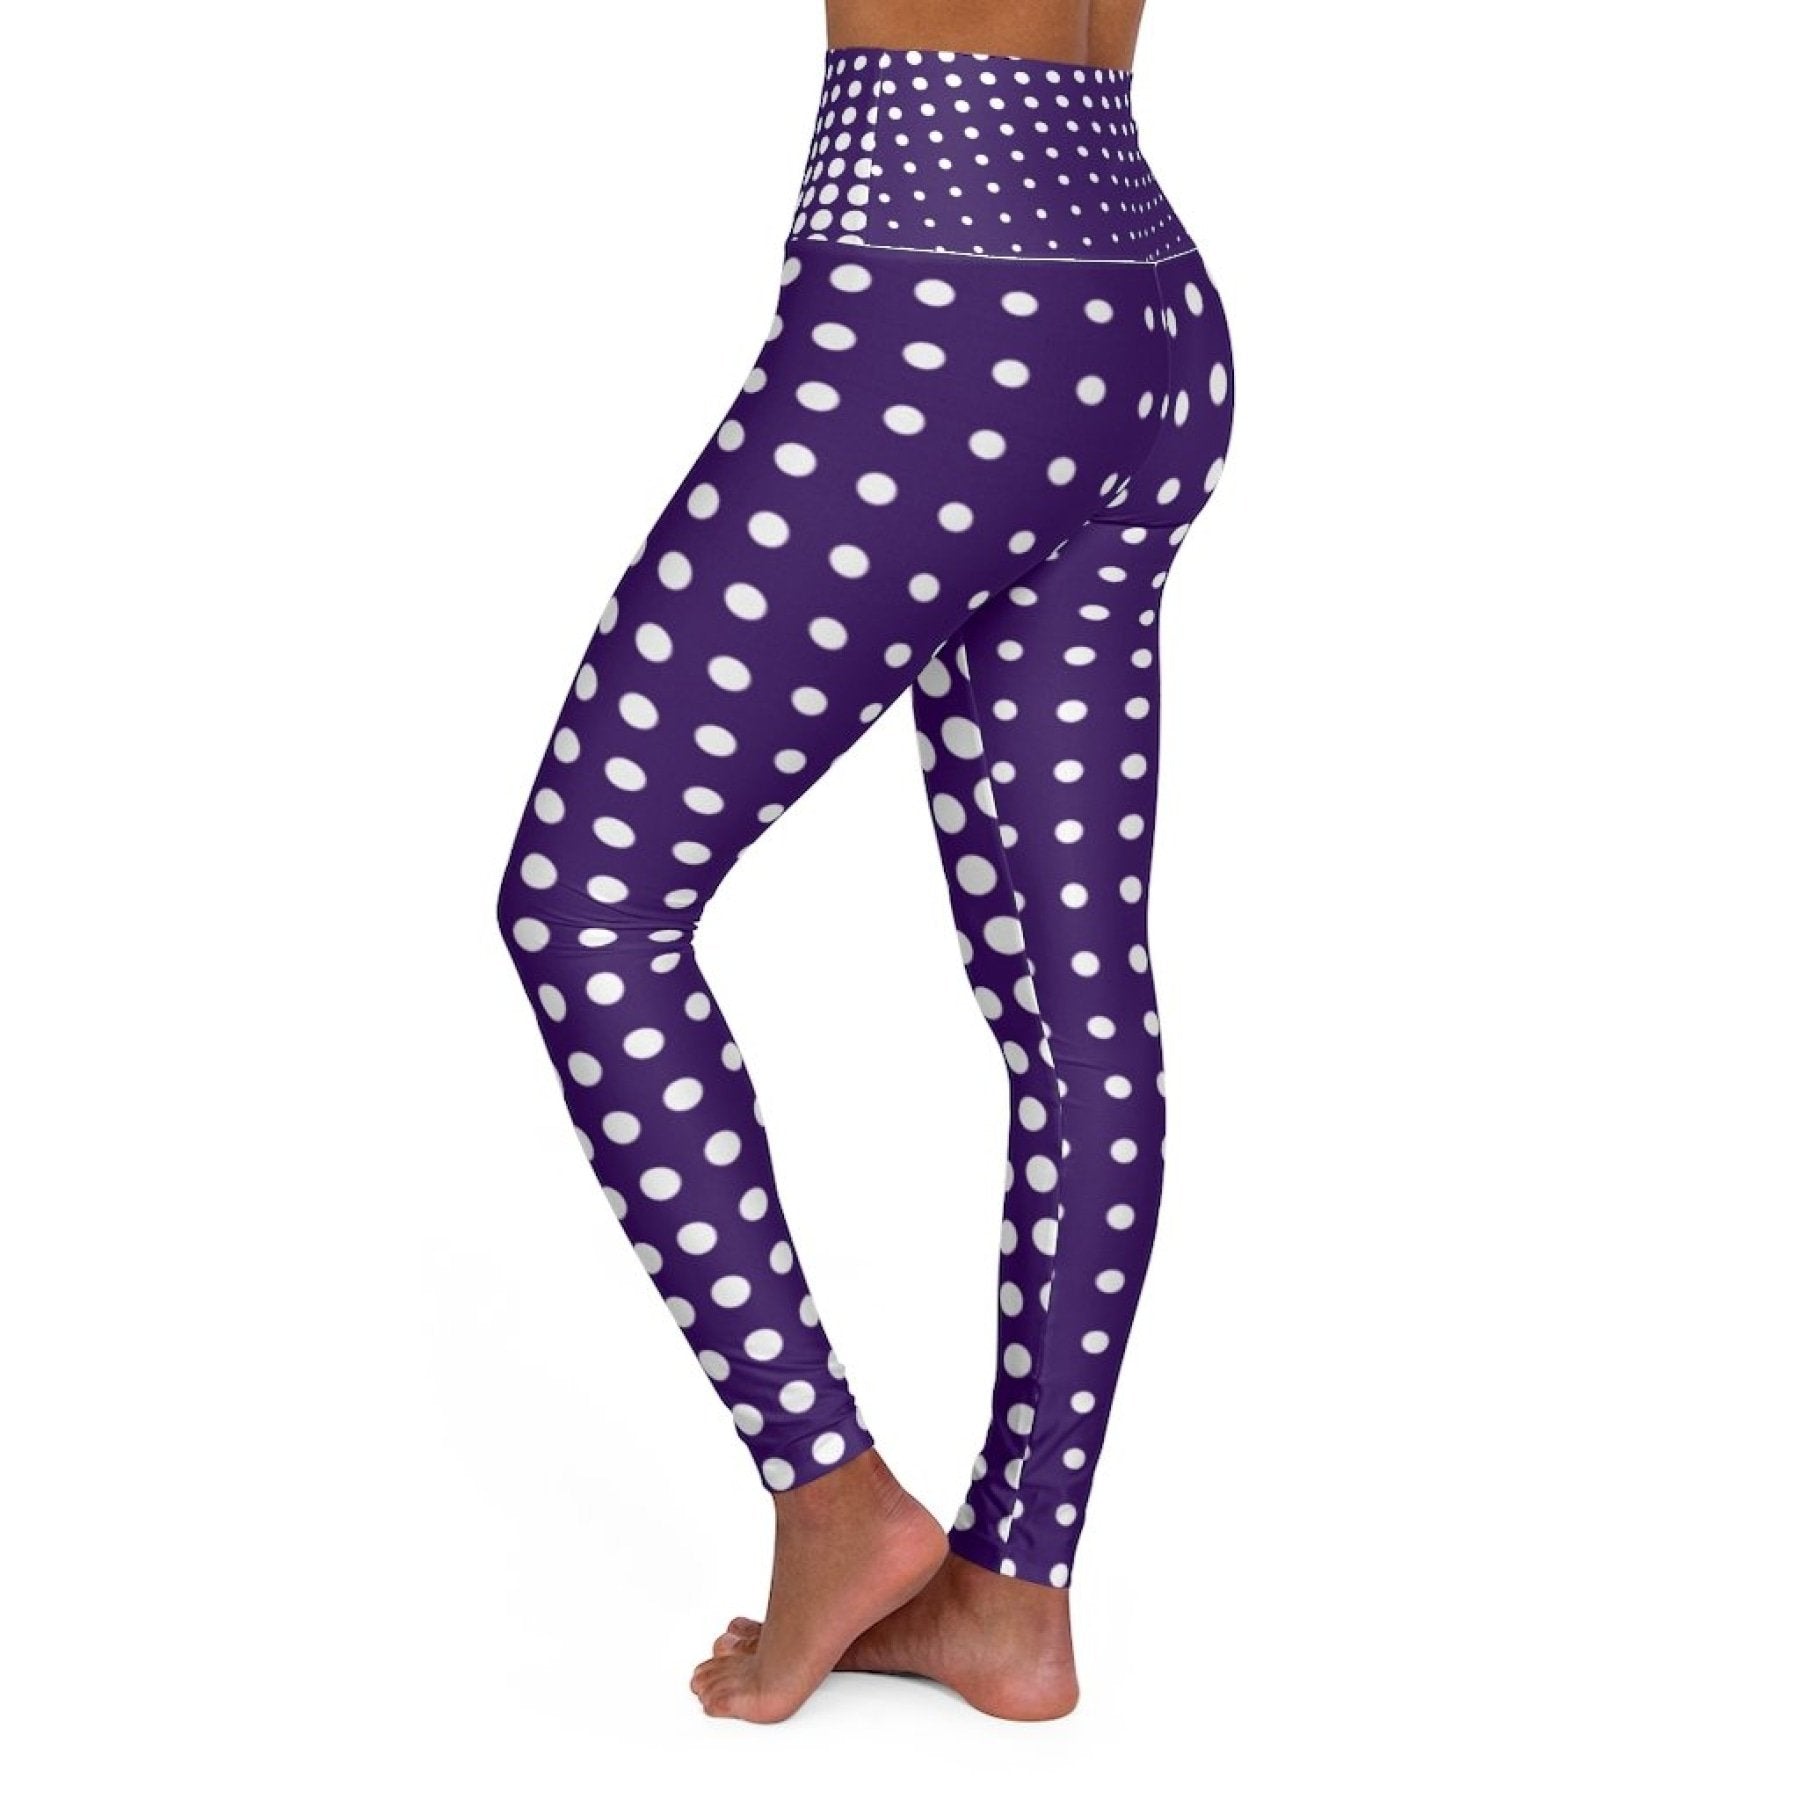 High Waisted Yoga Pants, Purple And White Polka Dot Style Sports Pants